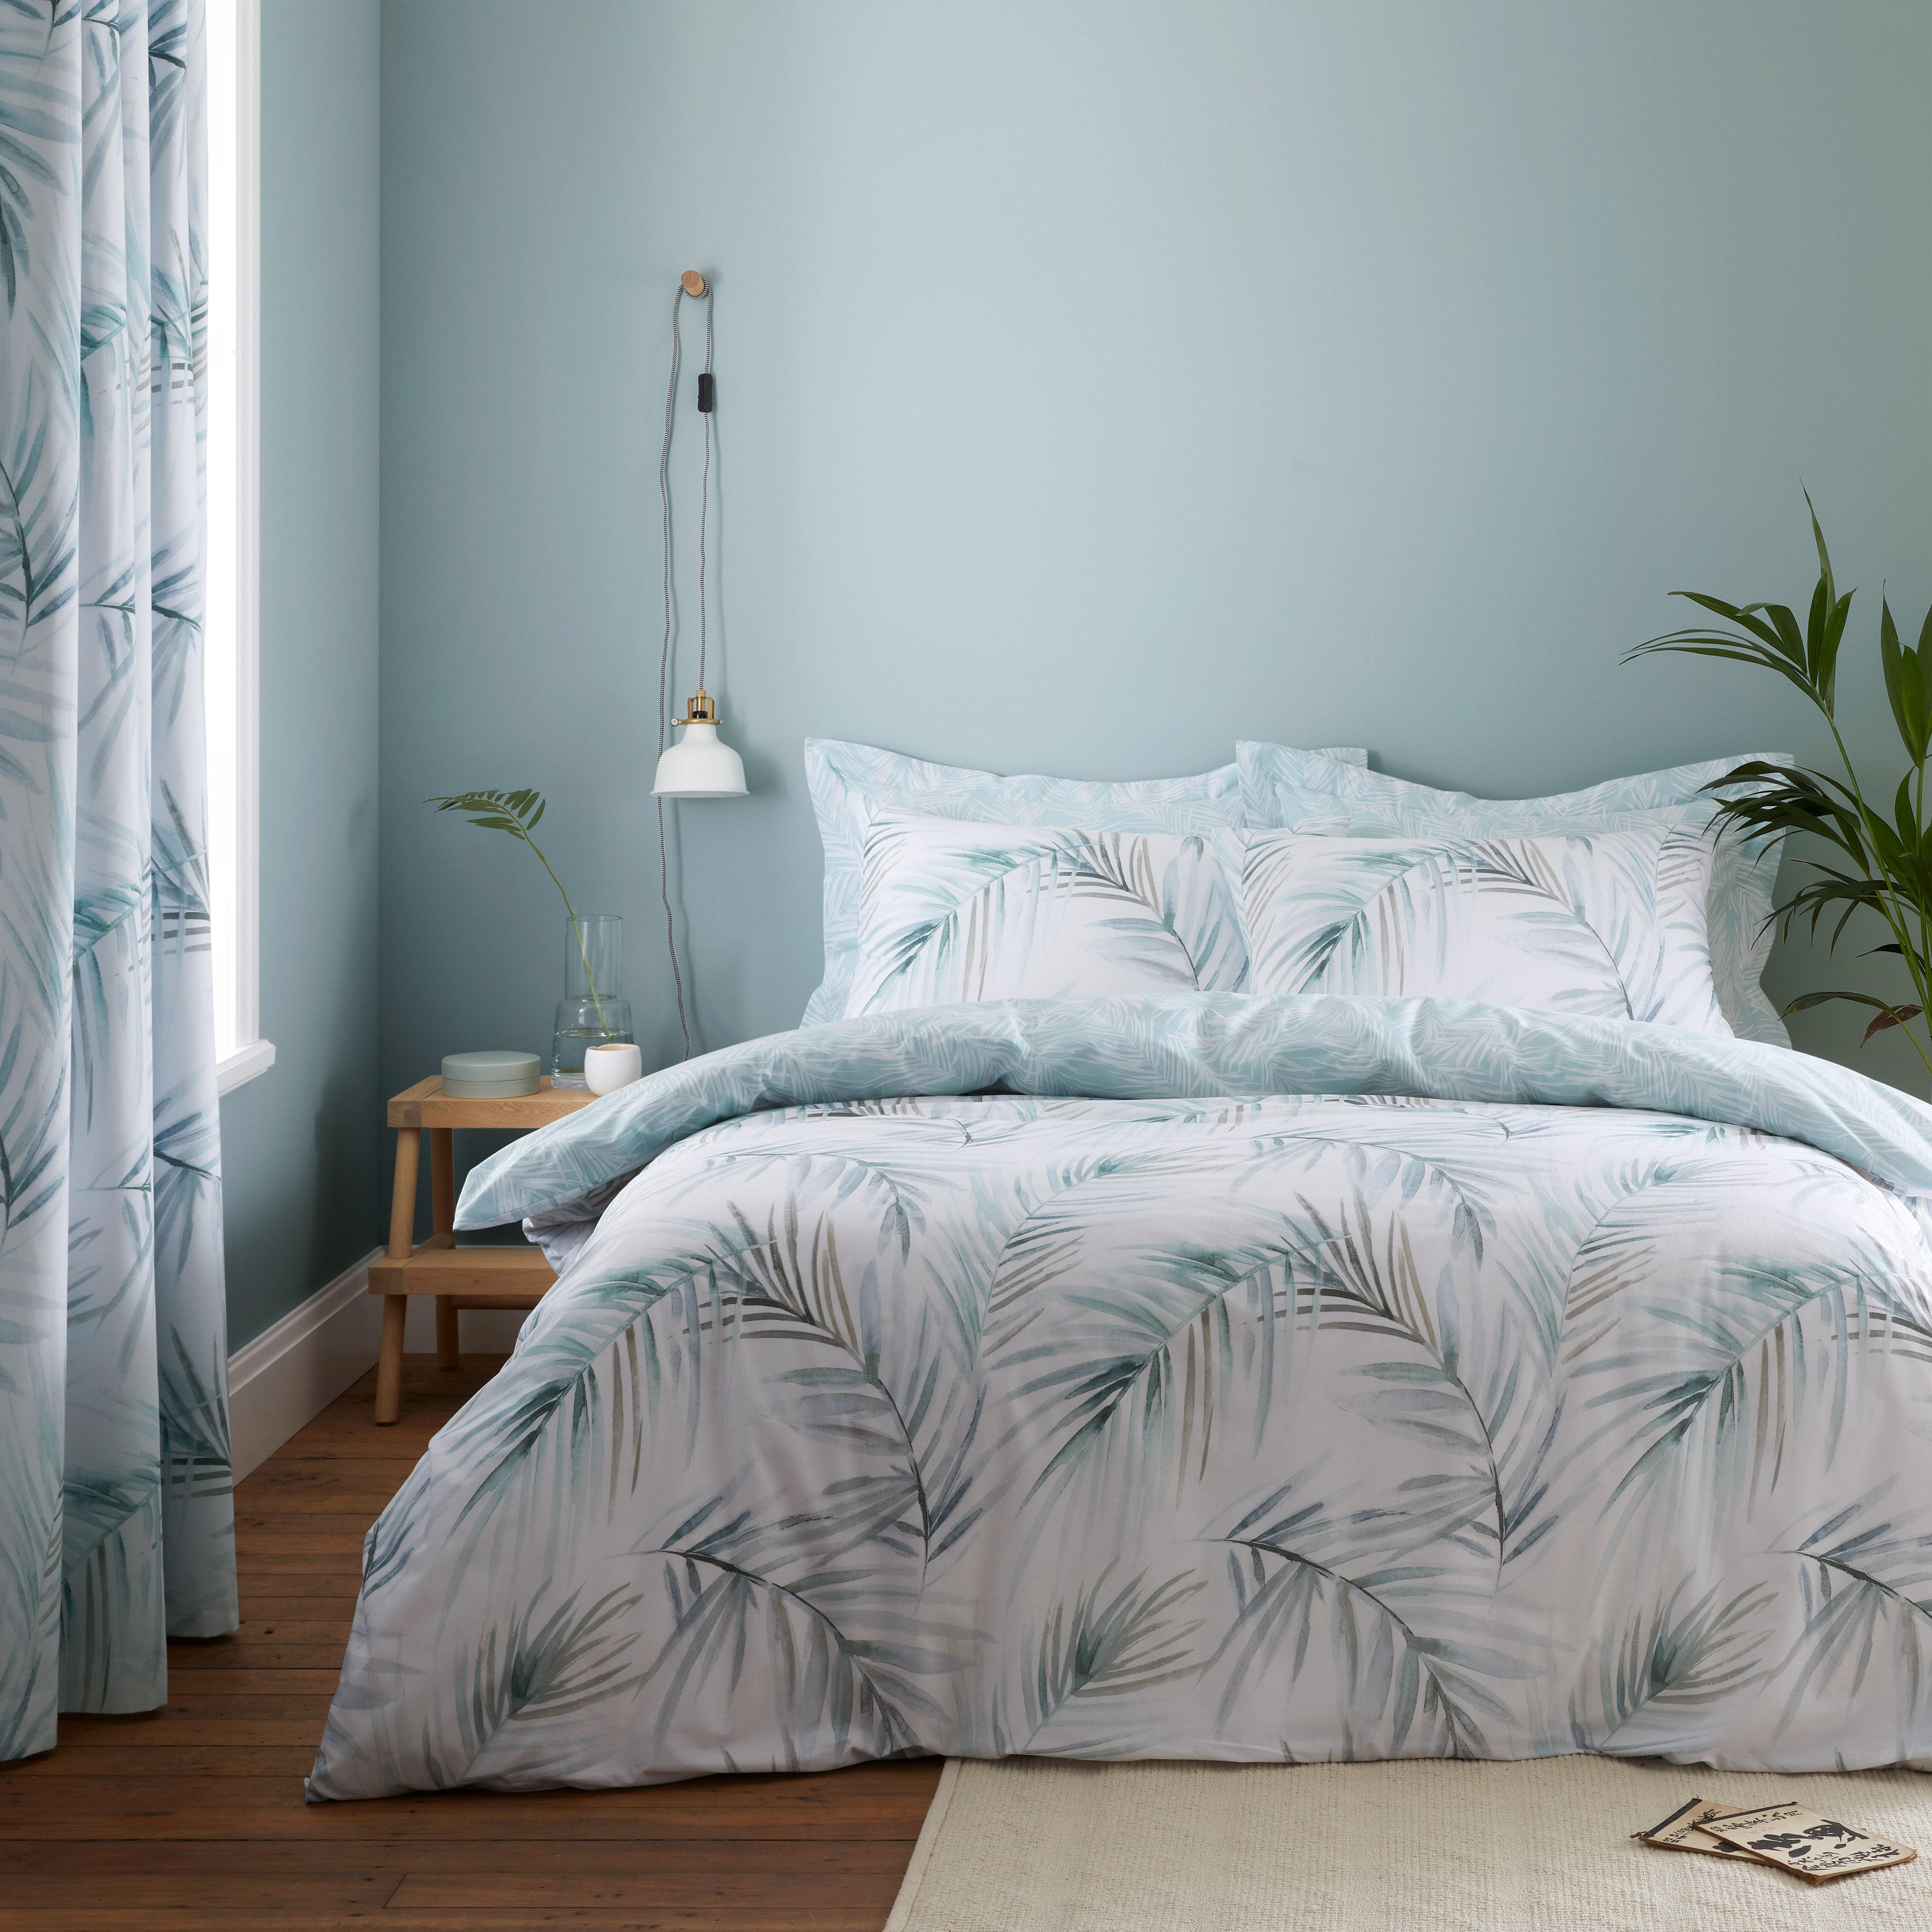 Serenity Palm Leaf Seafoam Duvet Cover And Pillowcase Set Greenwhite